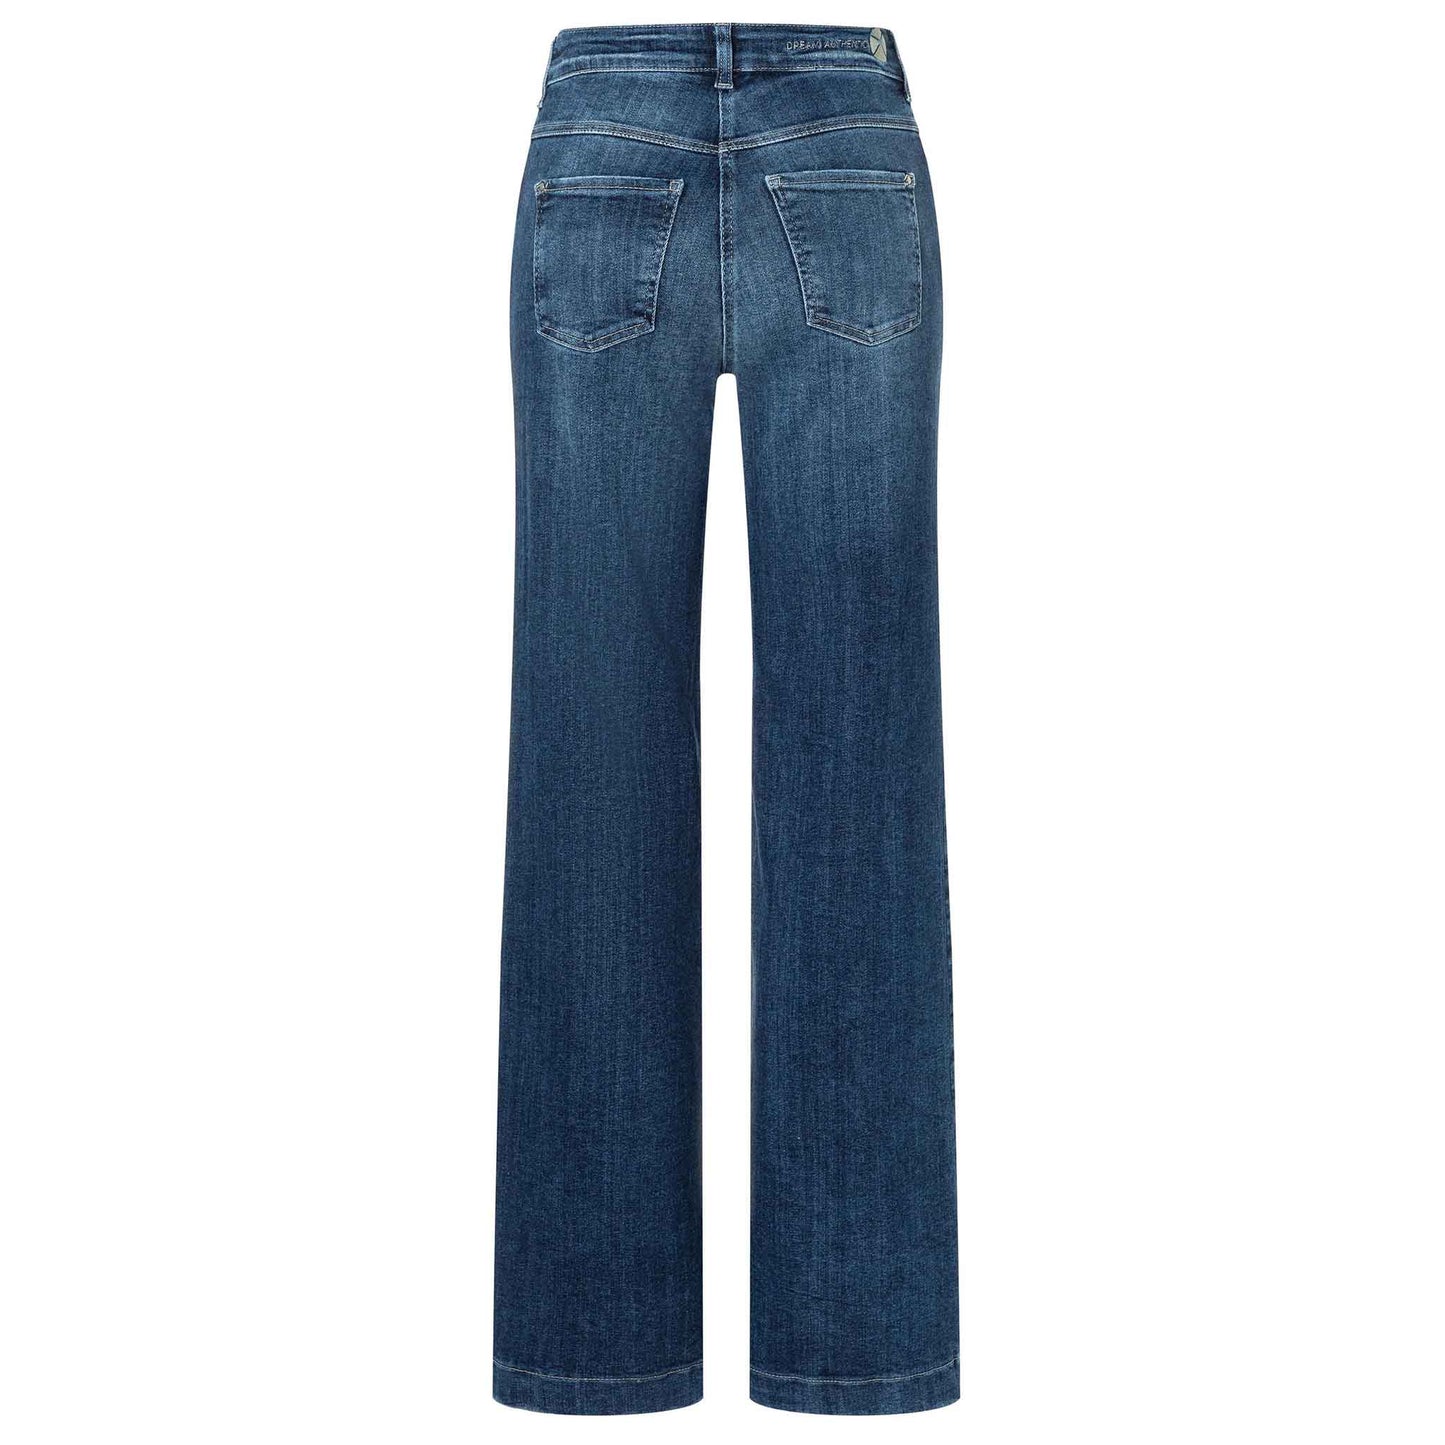 kleding lange vrouwen mac jeans dream wide auth cobalt